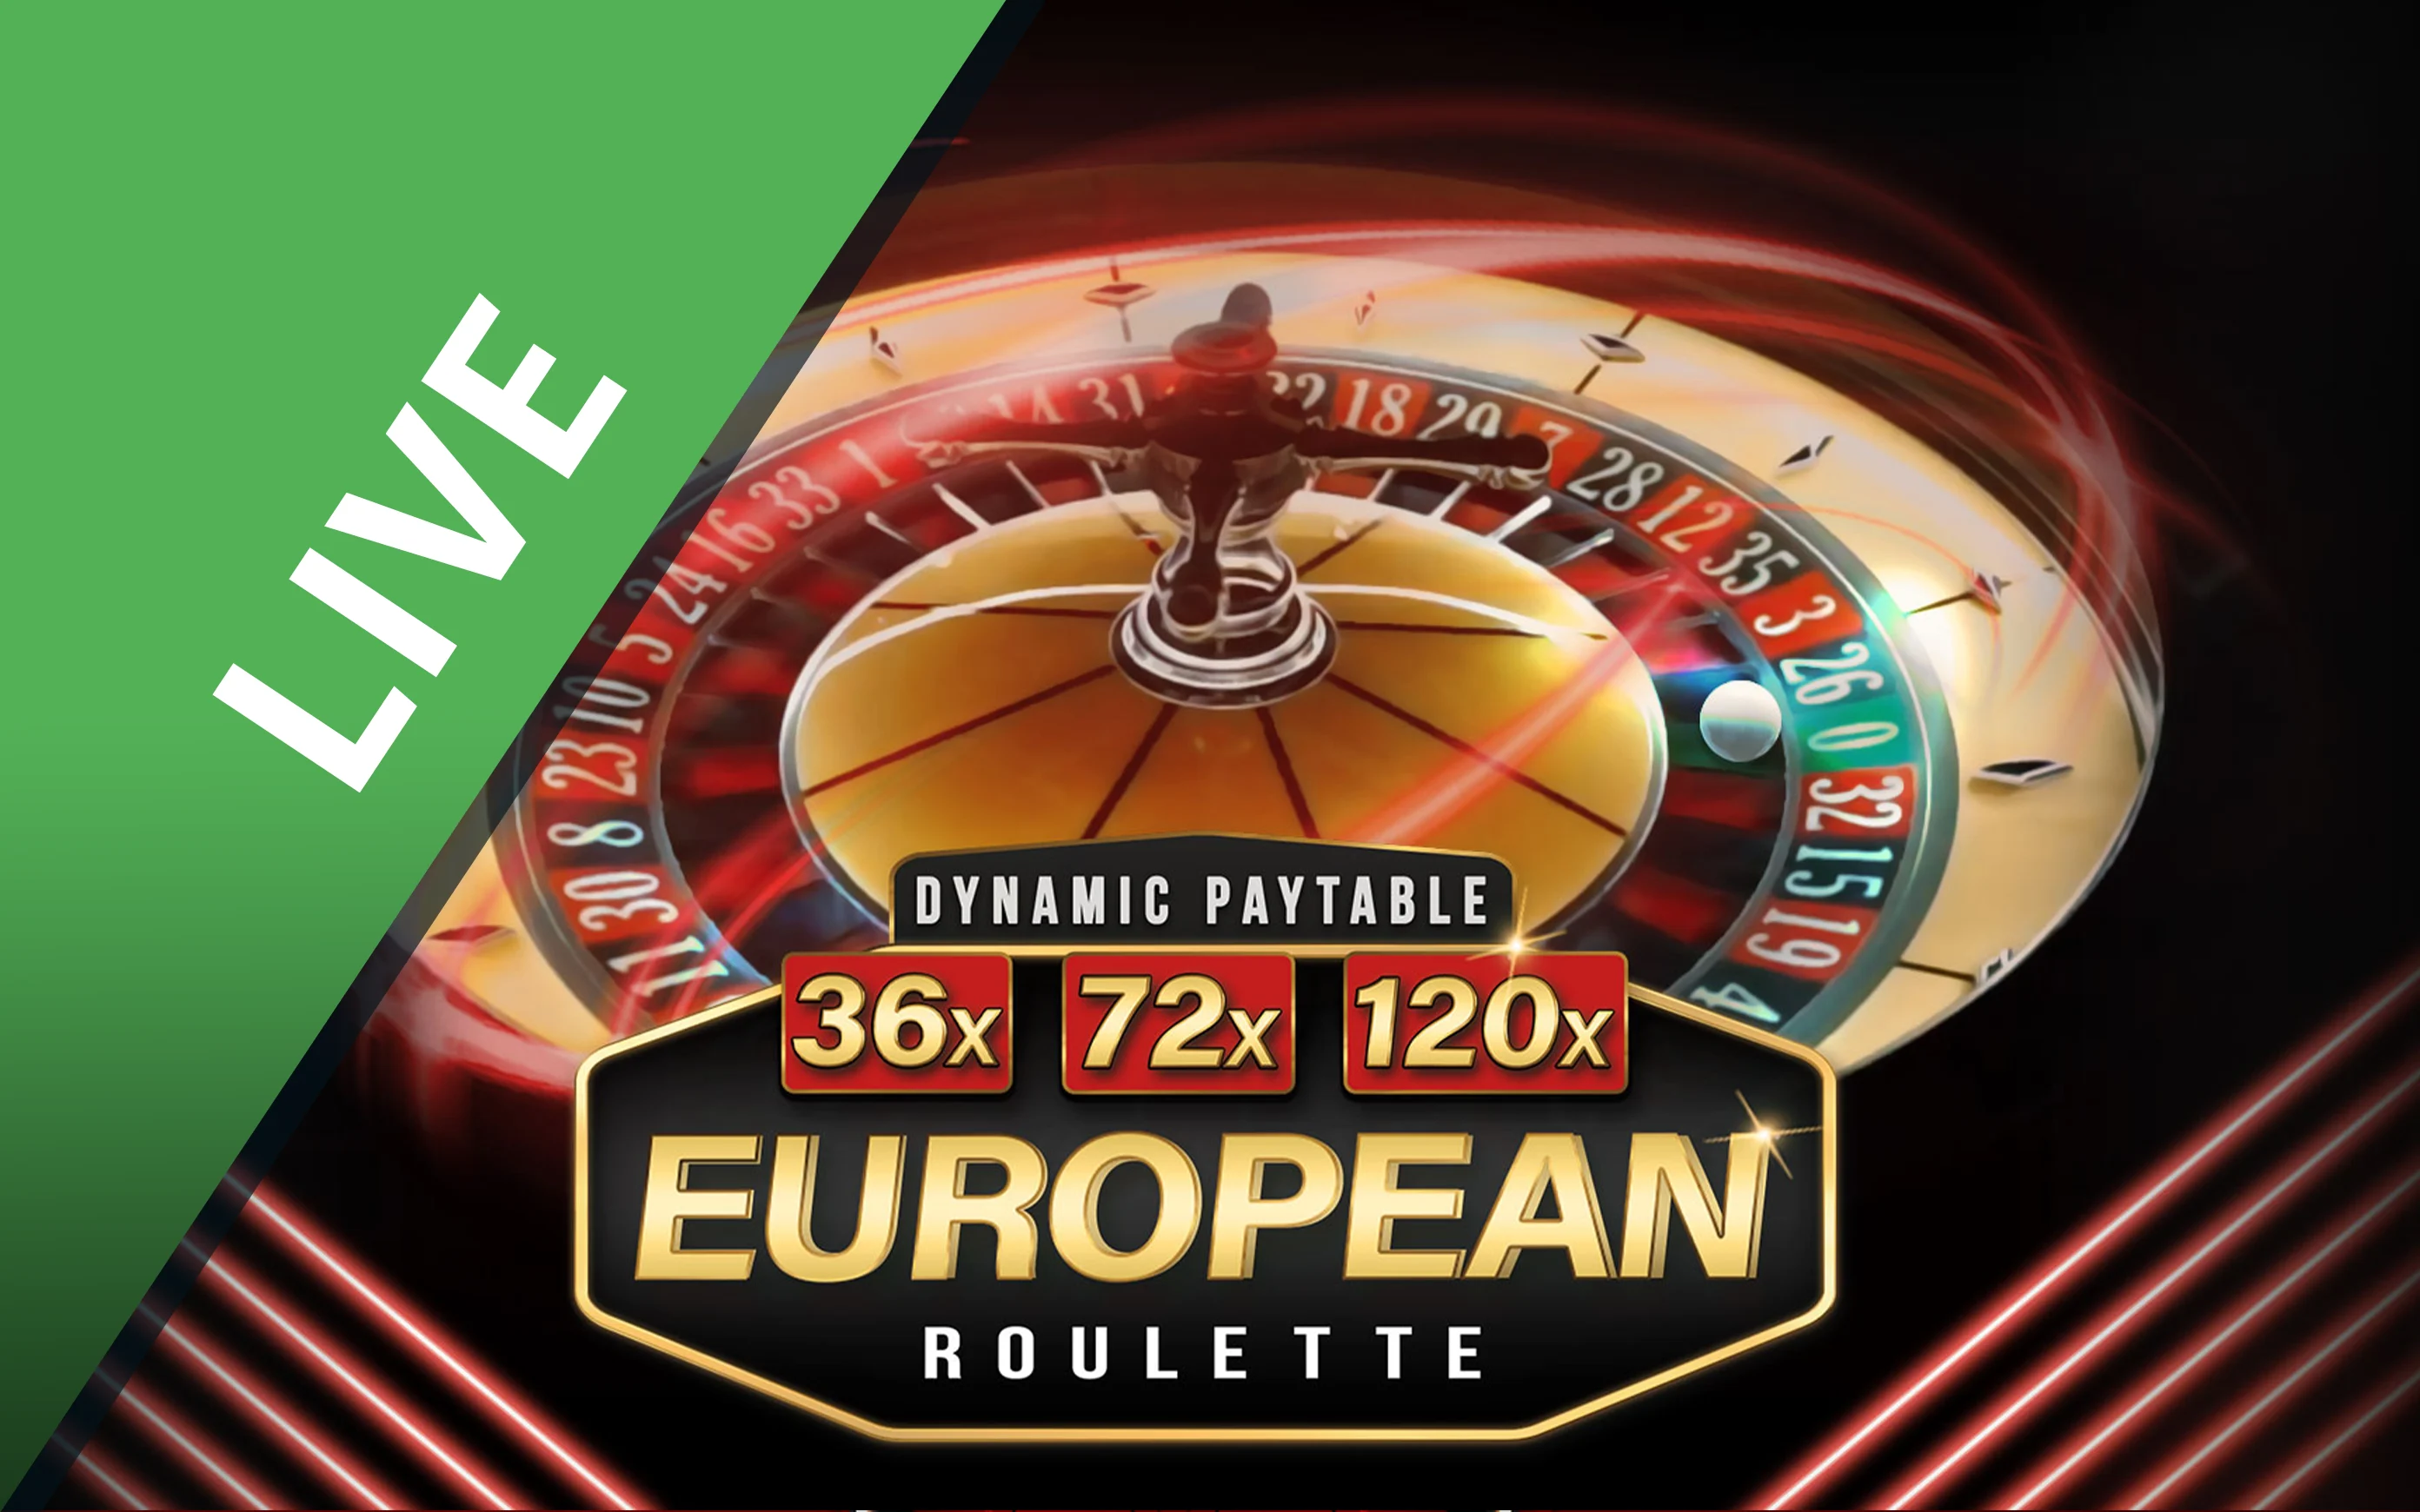 Play Dynamic European Roulette on Starcasino.be online casino